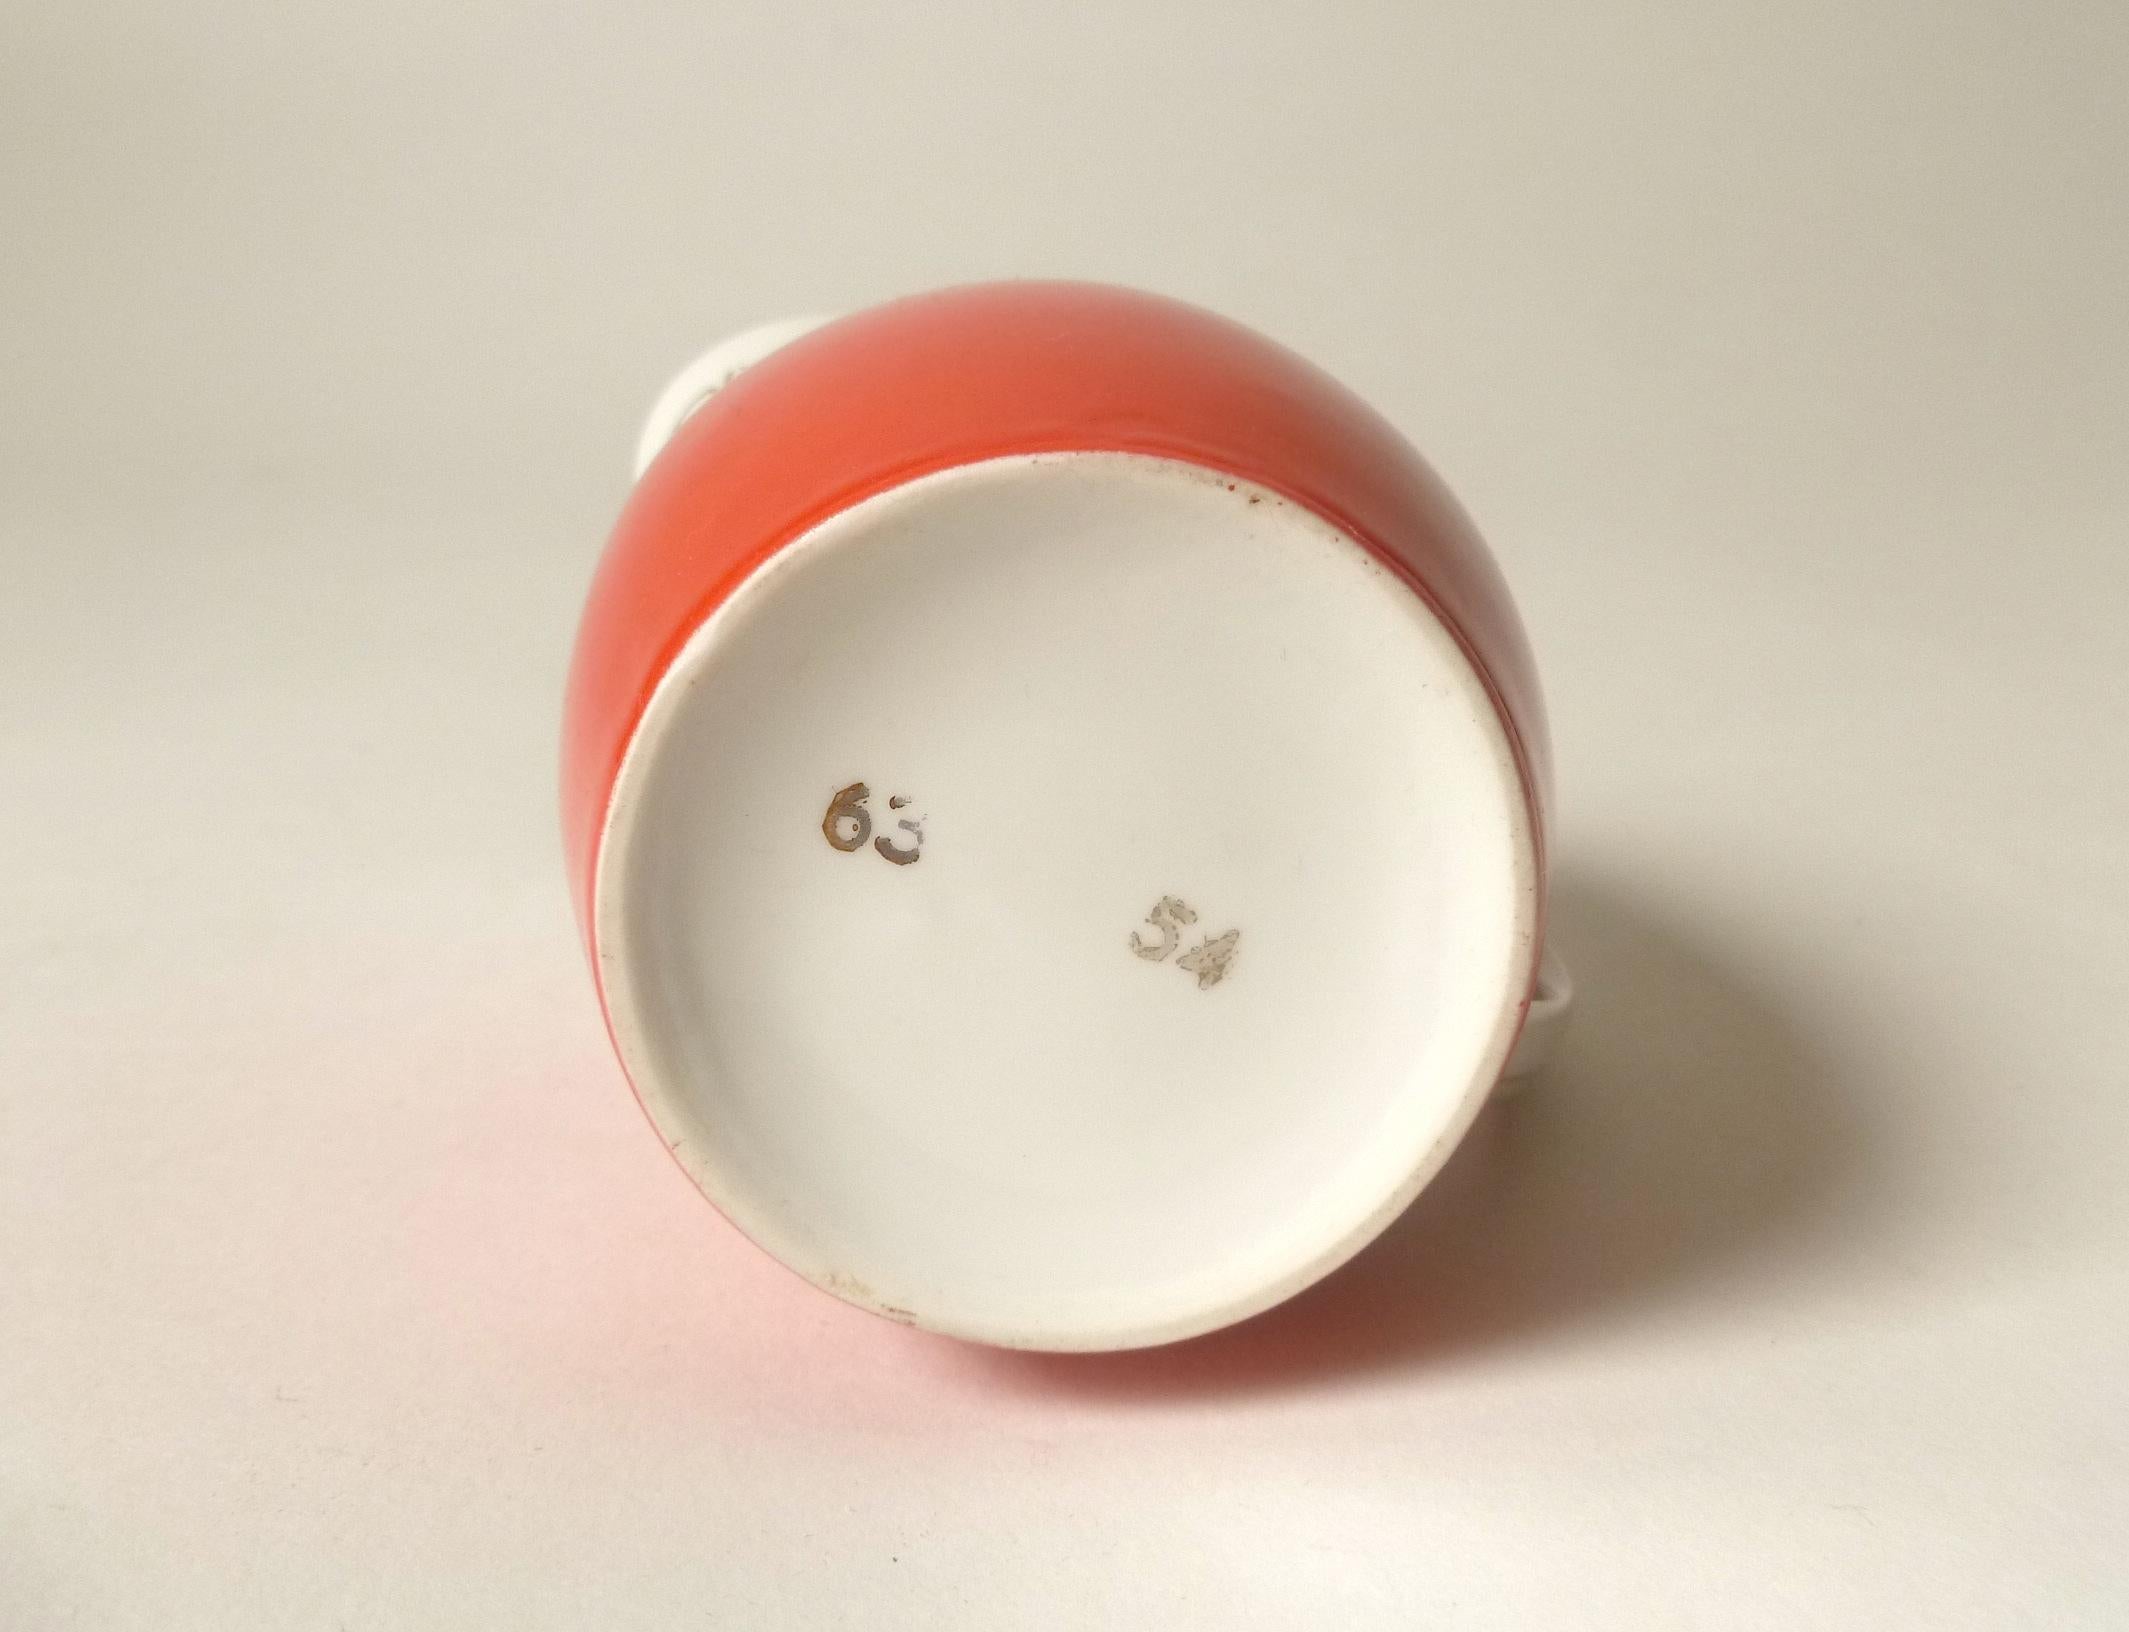 Hand-Crafted Modernist Bauhaus Porcelain Creamer by Chodziez, Gold Trim, Made in Poland For Sale